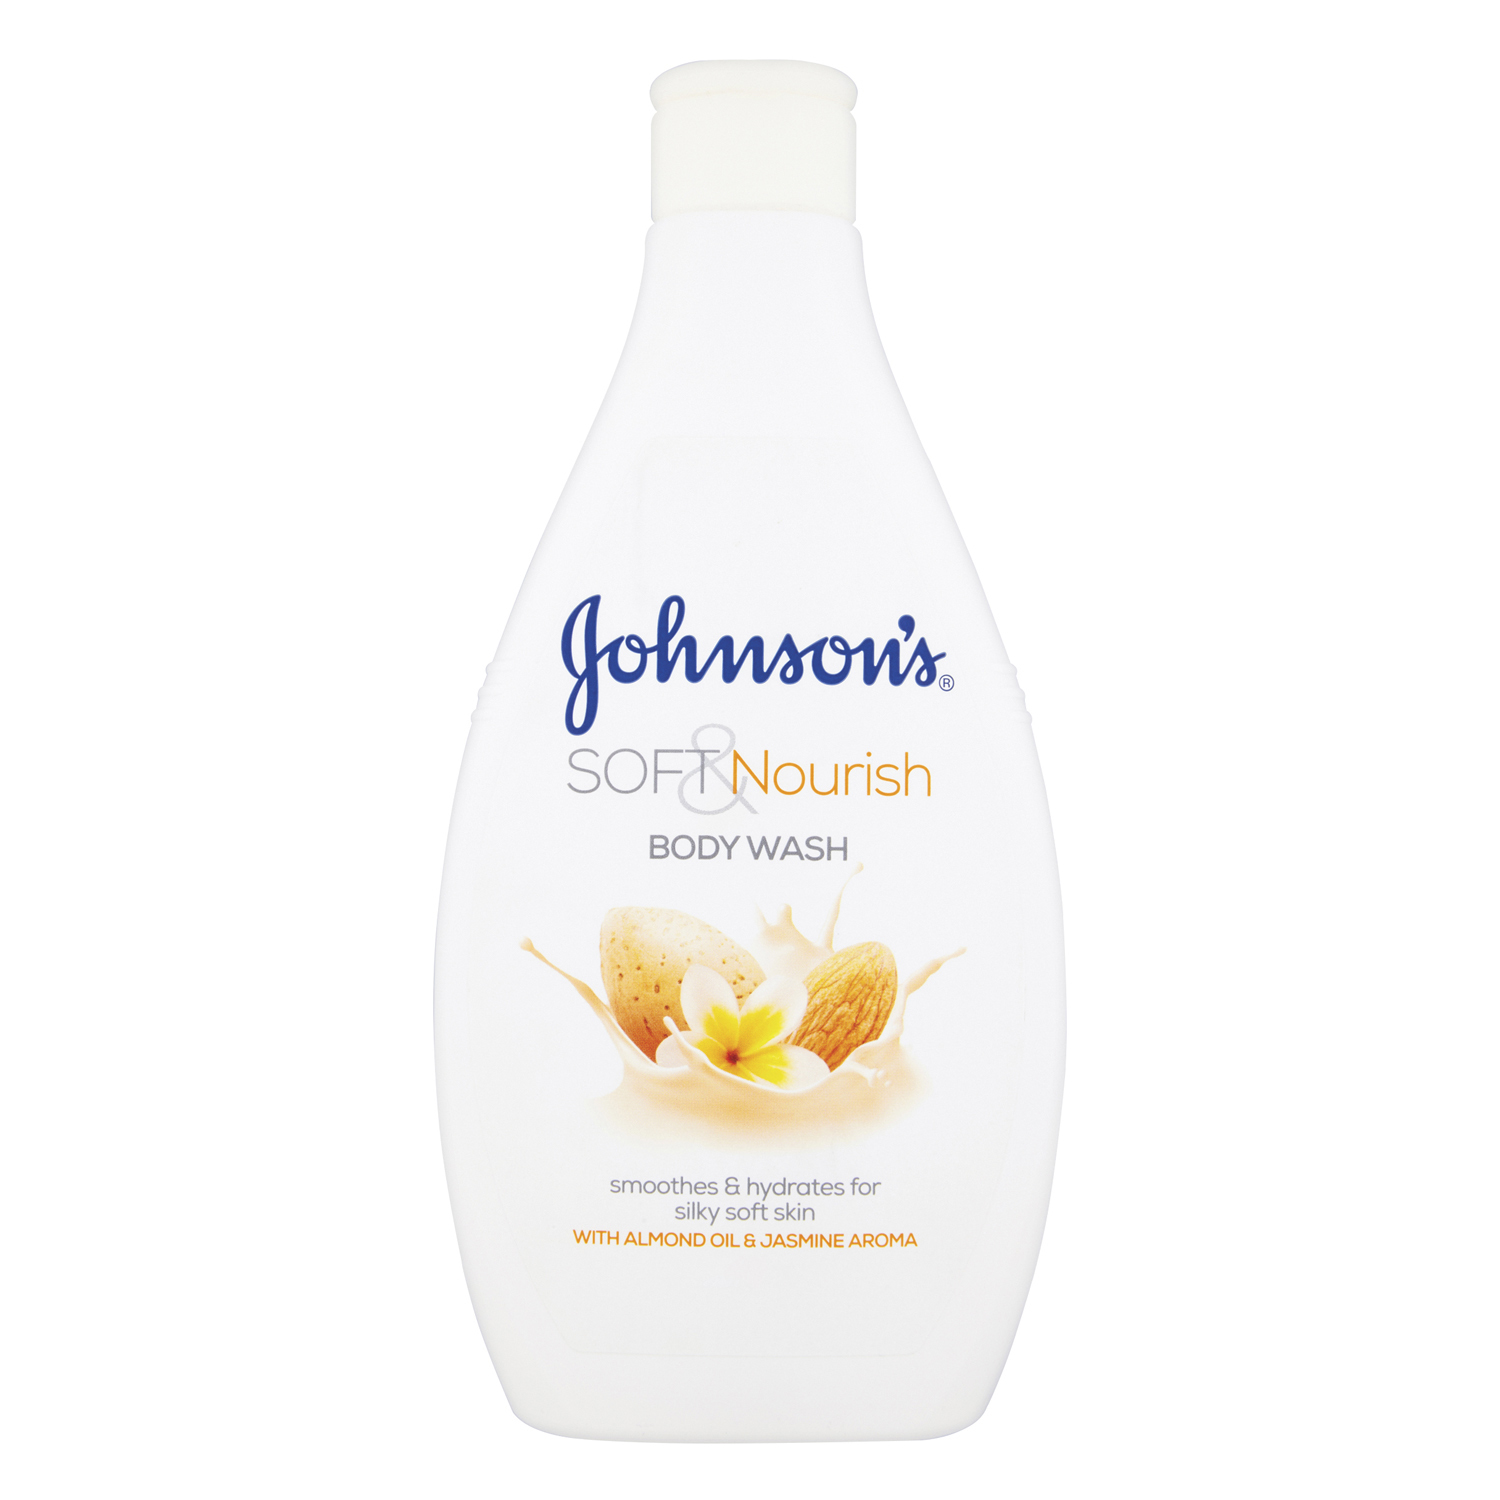 Johnson's Soft And Nourish Body Wash Image